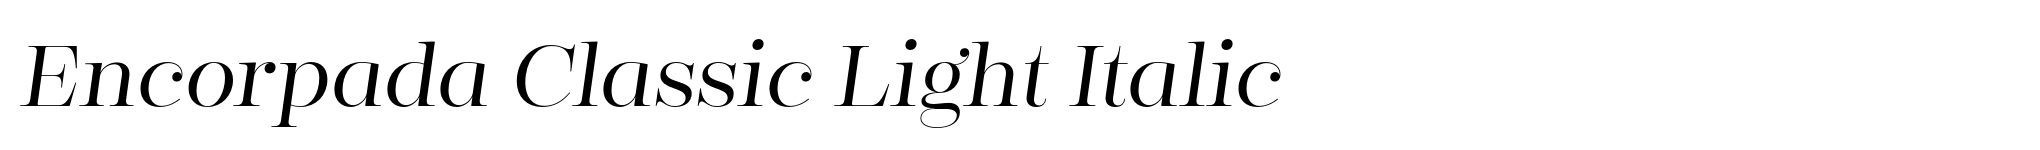 Encorpada Classic Light Italic image